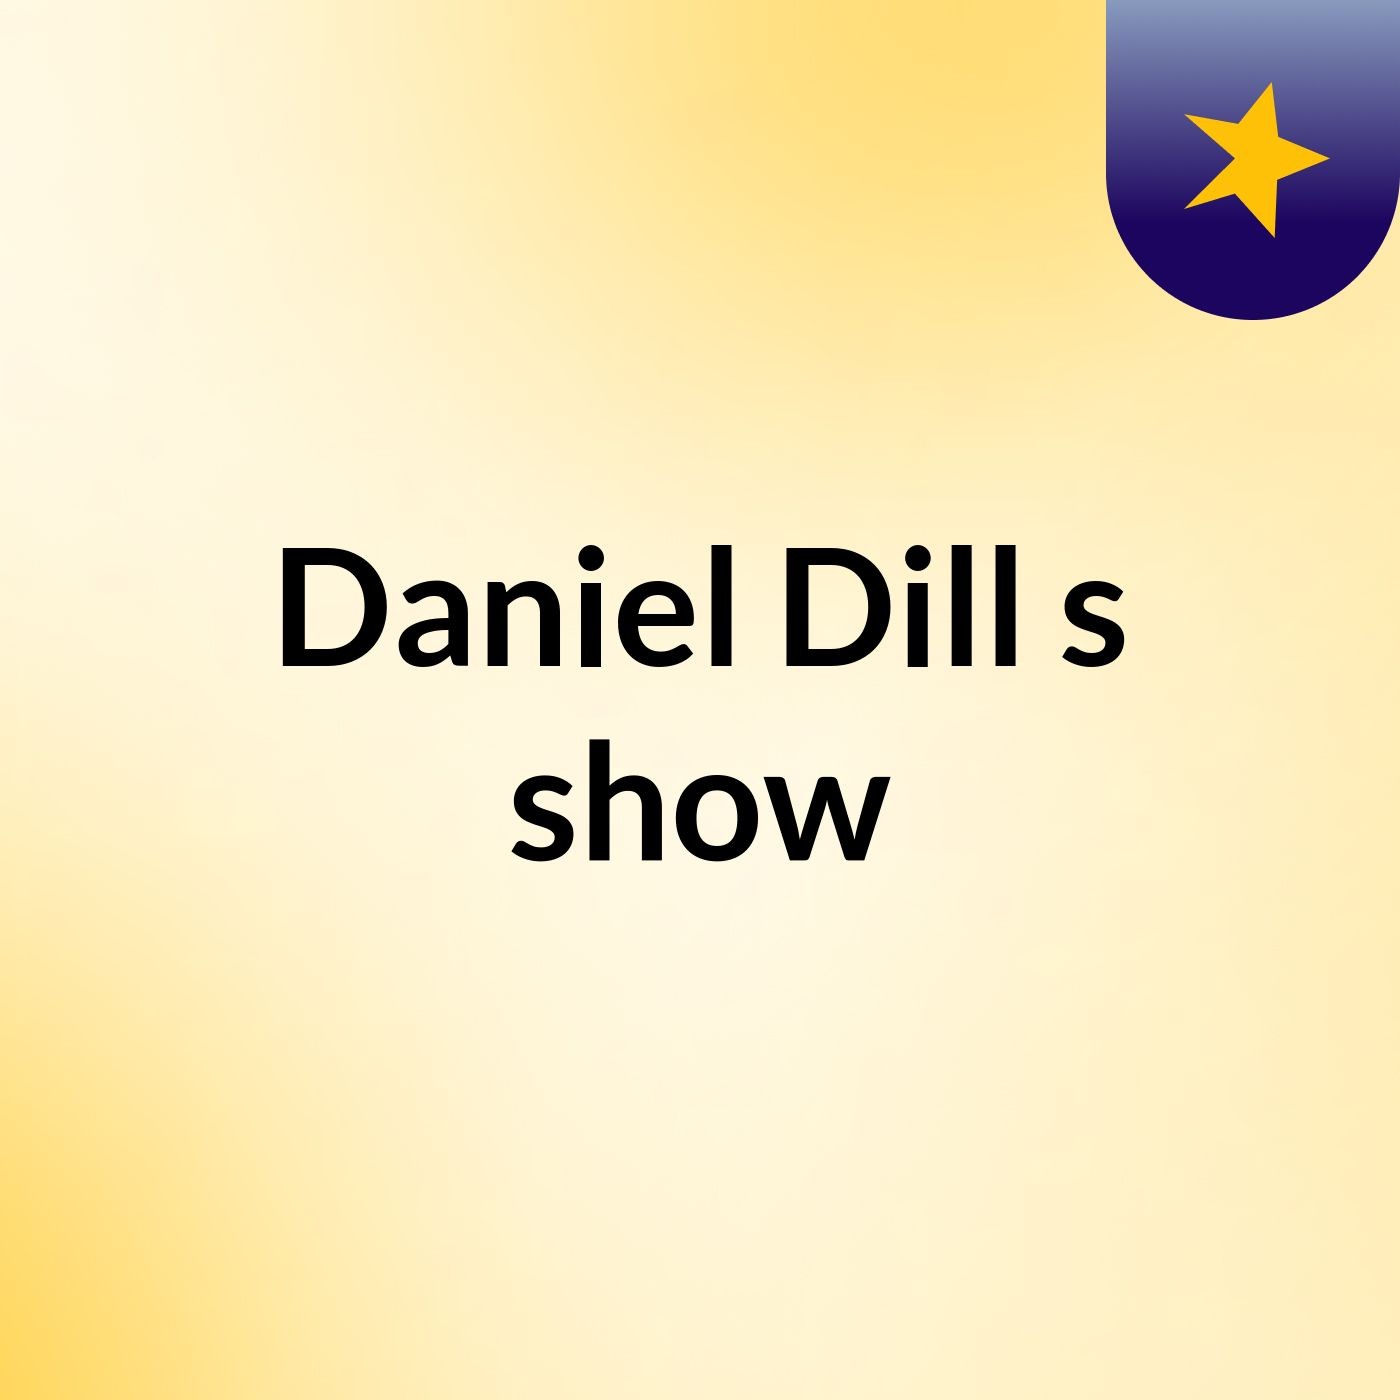 Daniel Dill's show